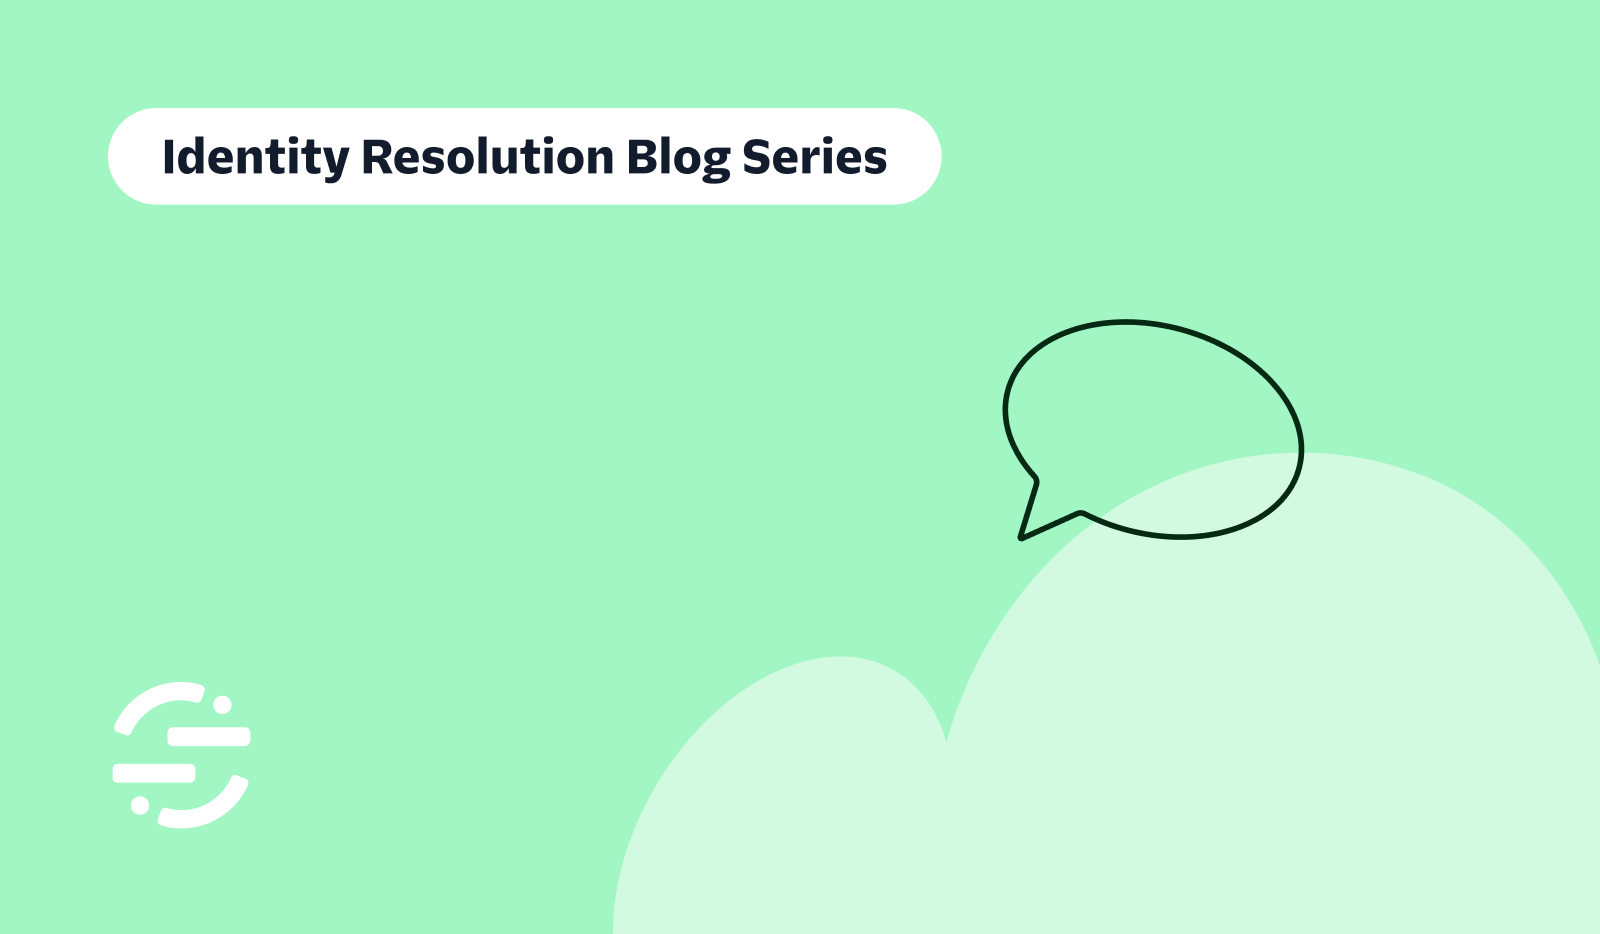 Id Resolution Blog Series